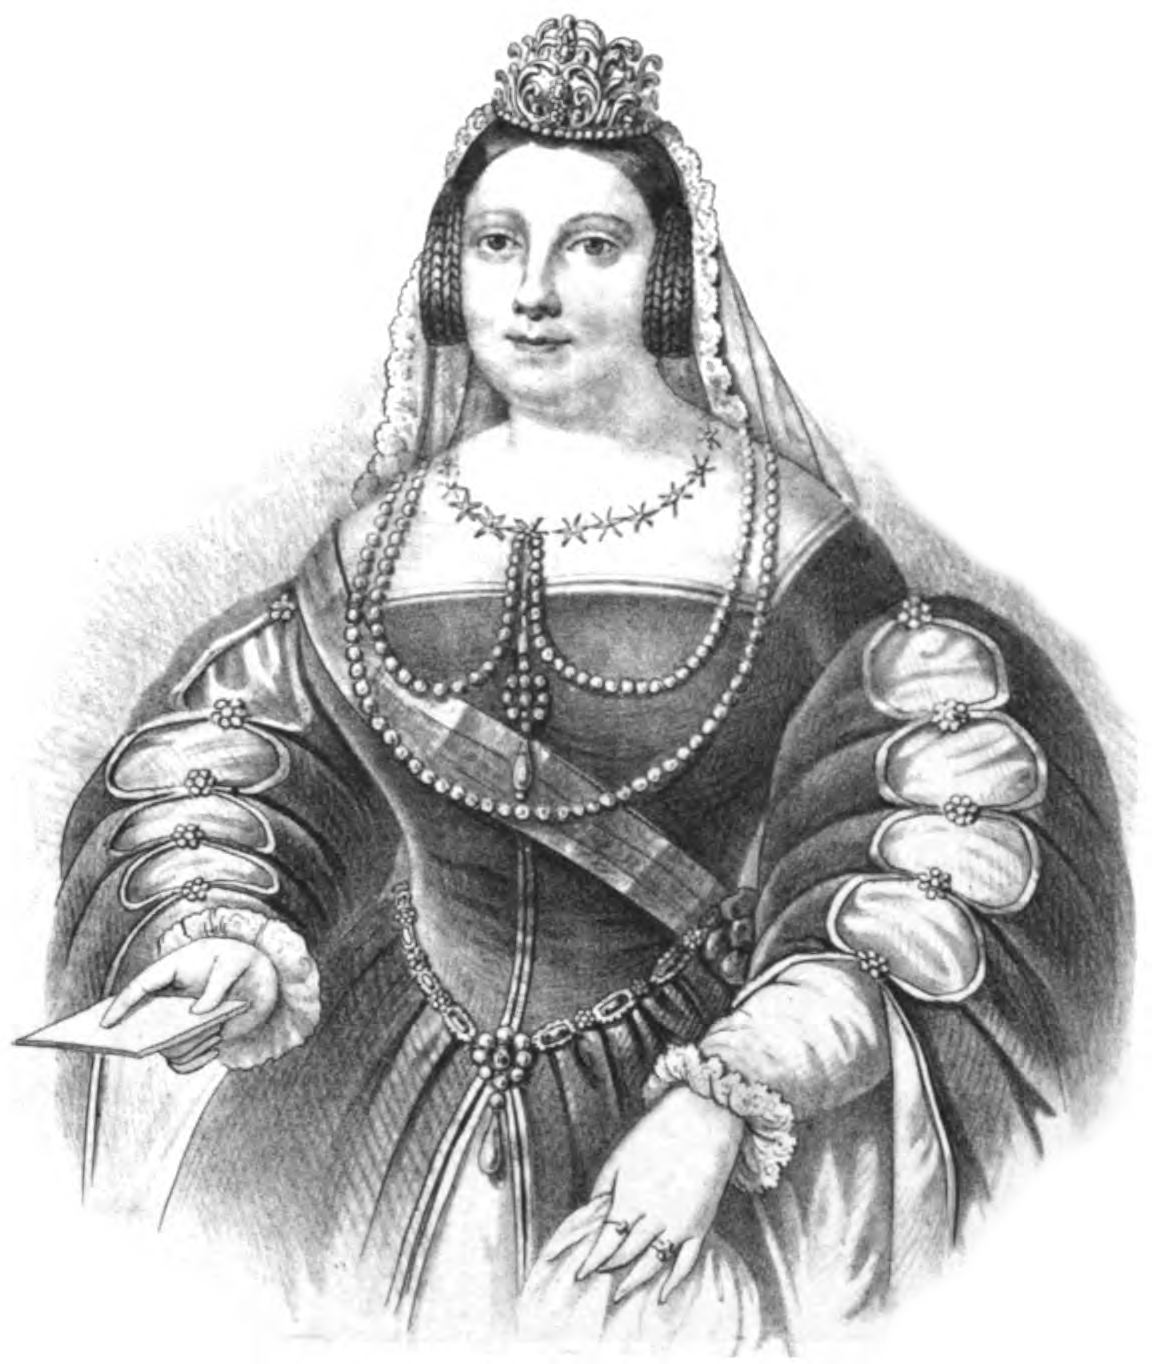 S. M. MARIA CRISTINA - Principessa delle Due Sicilie